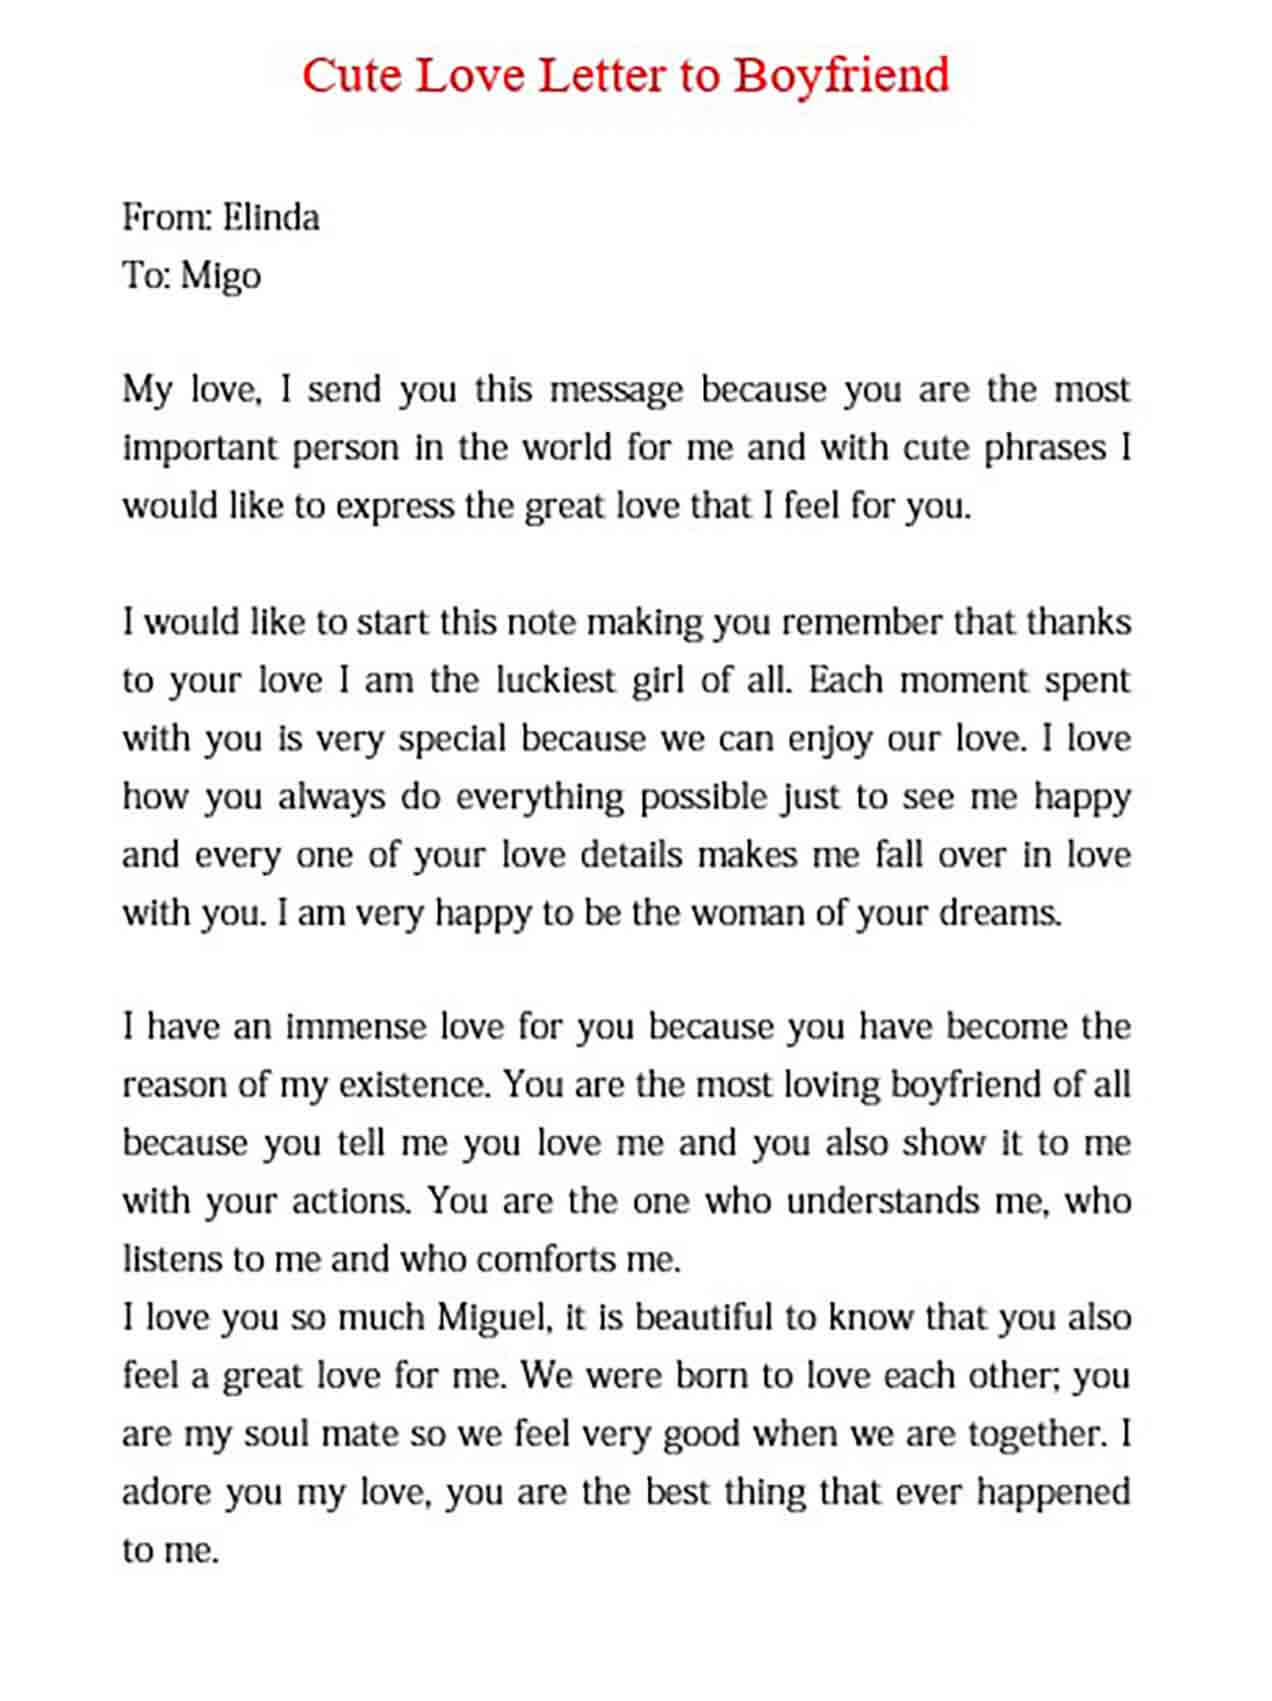 A Letter To My Boyfriend About My Feelings